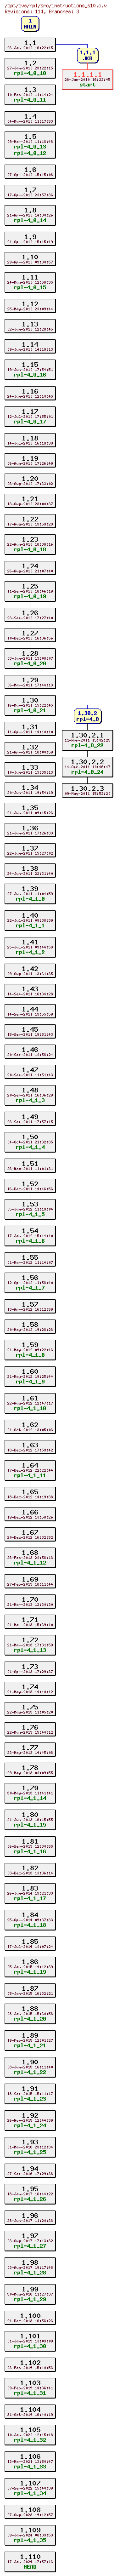 Revision graph of rpl/src/instructions_s10.c